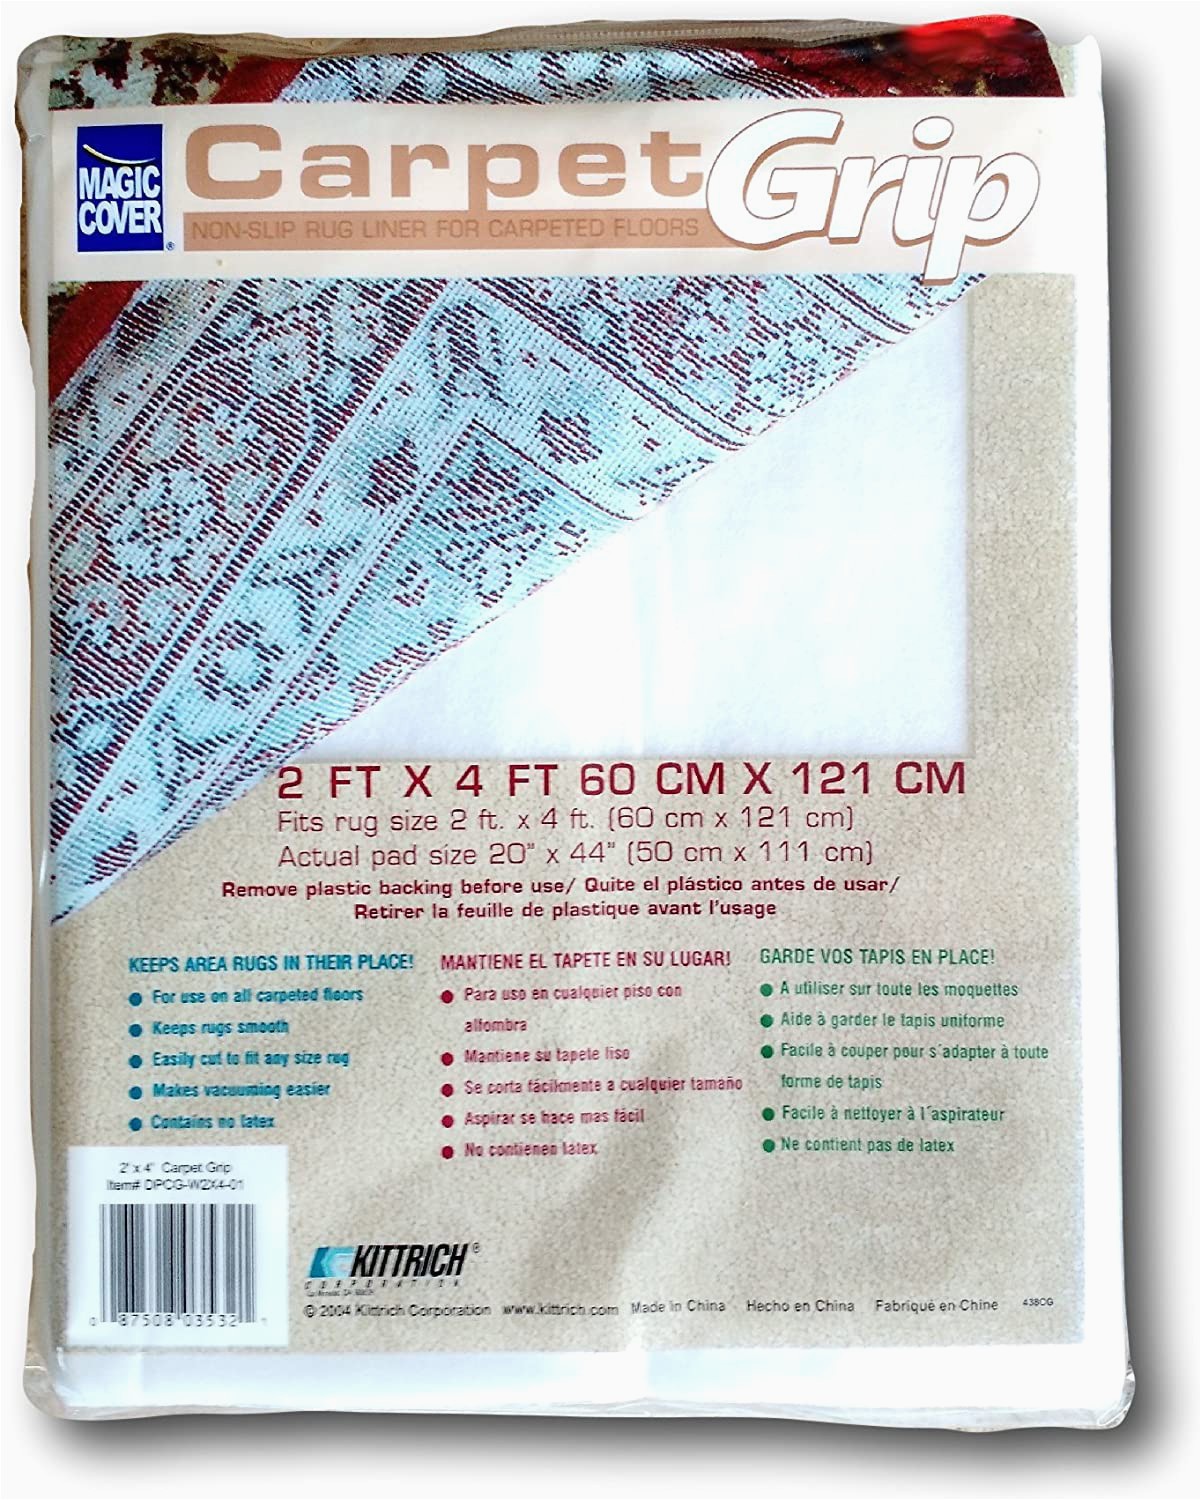 Prevent area Rugs From Slipping Magic Cover Carpet Grip Non Slip Rug Liner for Carpeted Floors area Rug Grip to Stop Rug Slipping 44 Inches